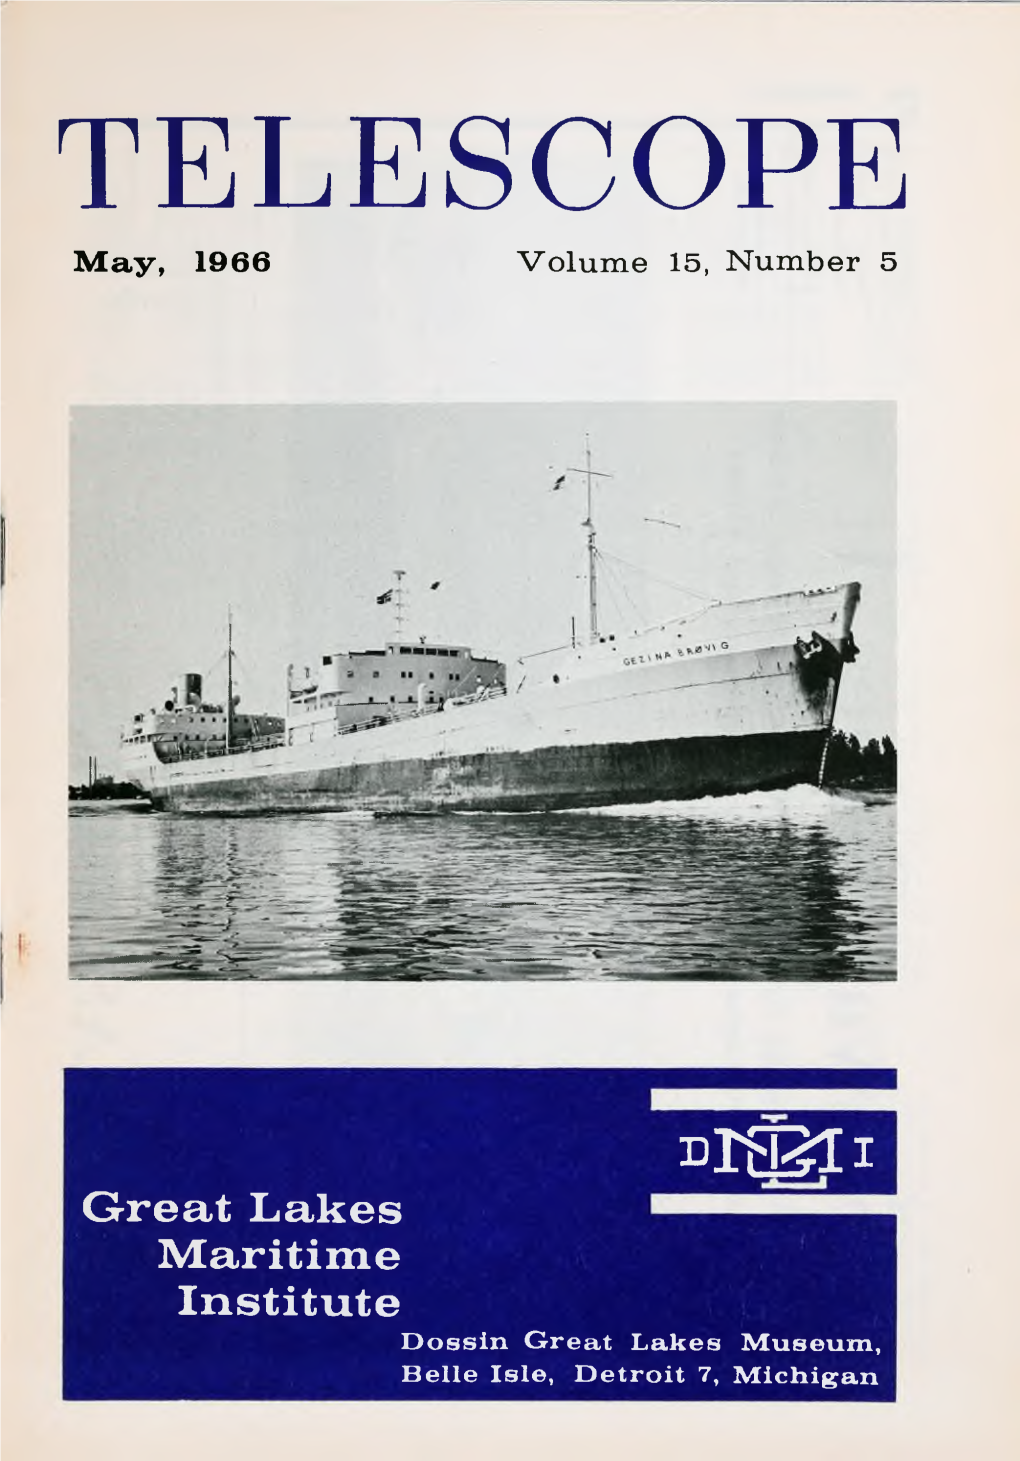 Blssii Great Lakes Maritime Institute